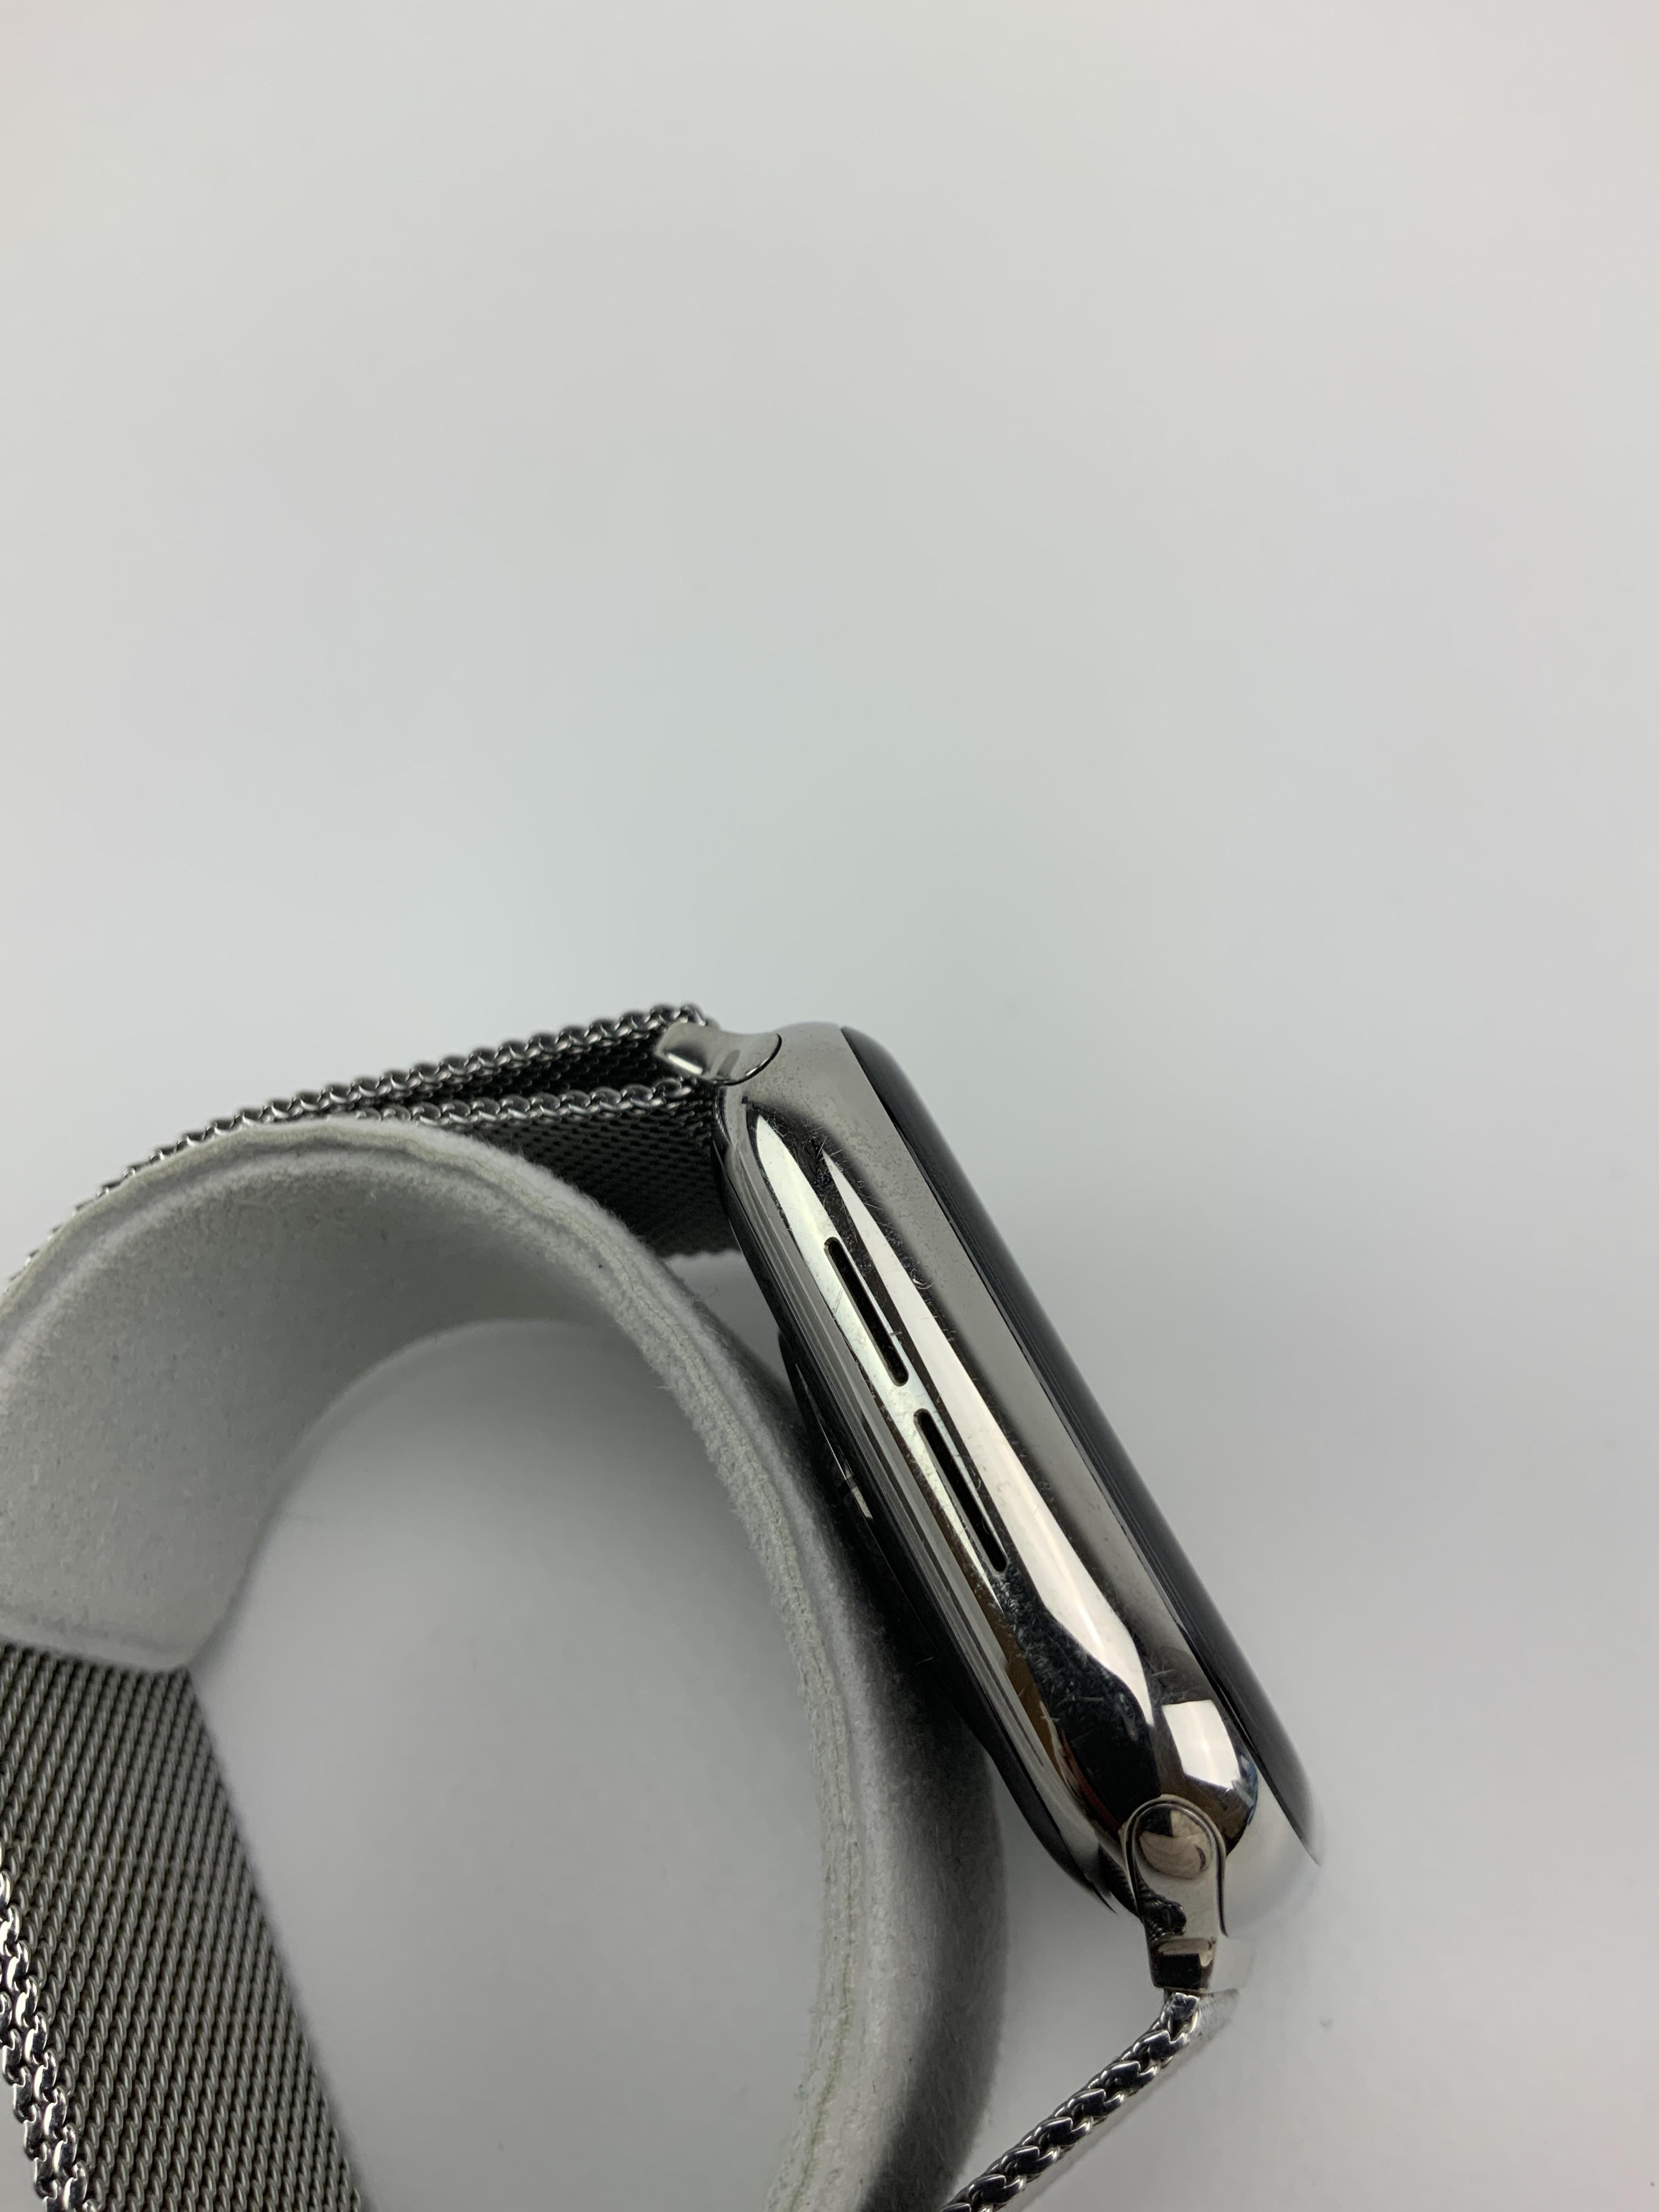 Watch Series 5 Steel Cellular (44mm), Silver, imagen 4